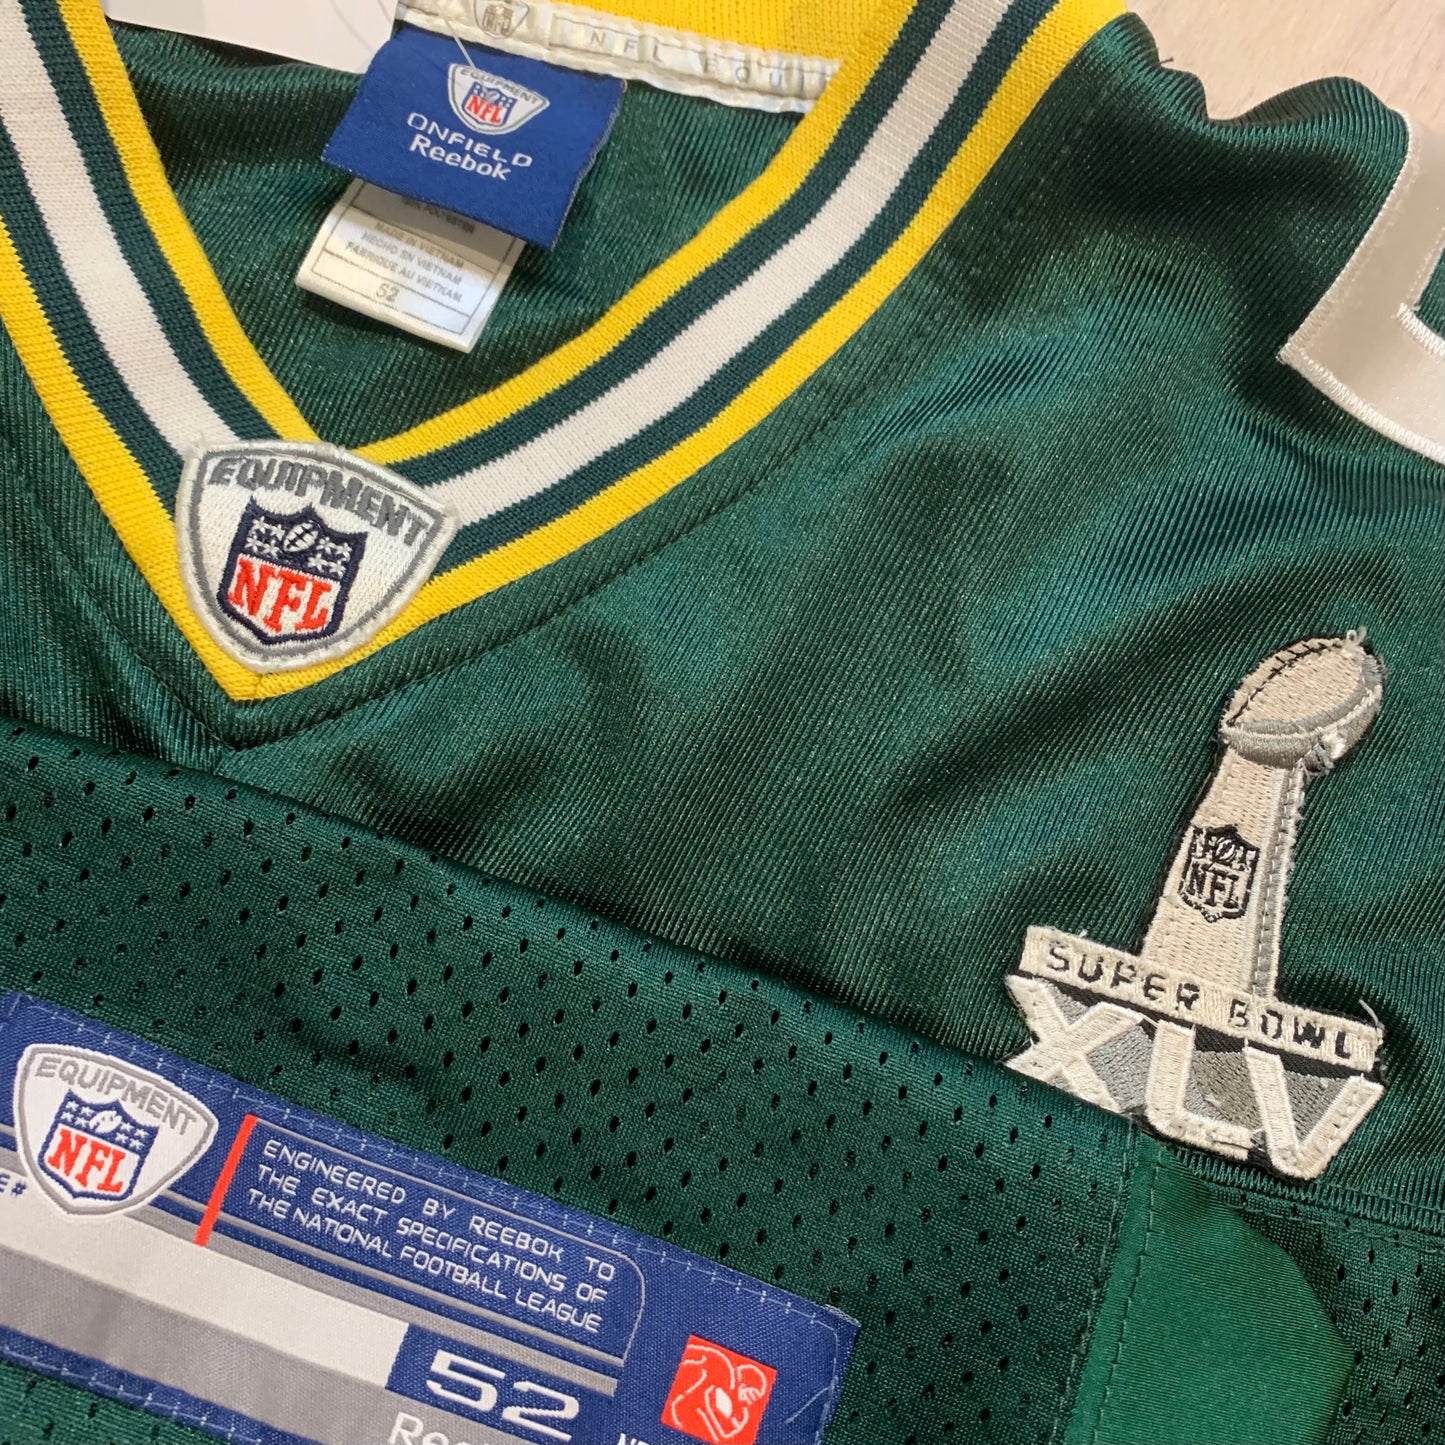 Packers Super Bowl Edition Clay Mathews Reebok Jersey